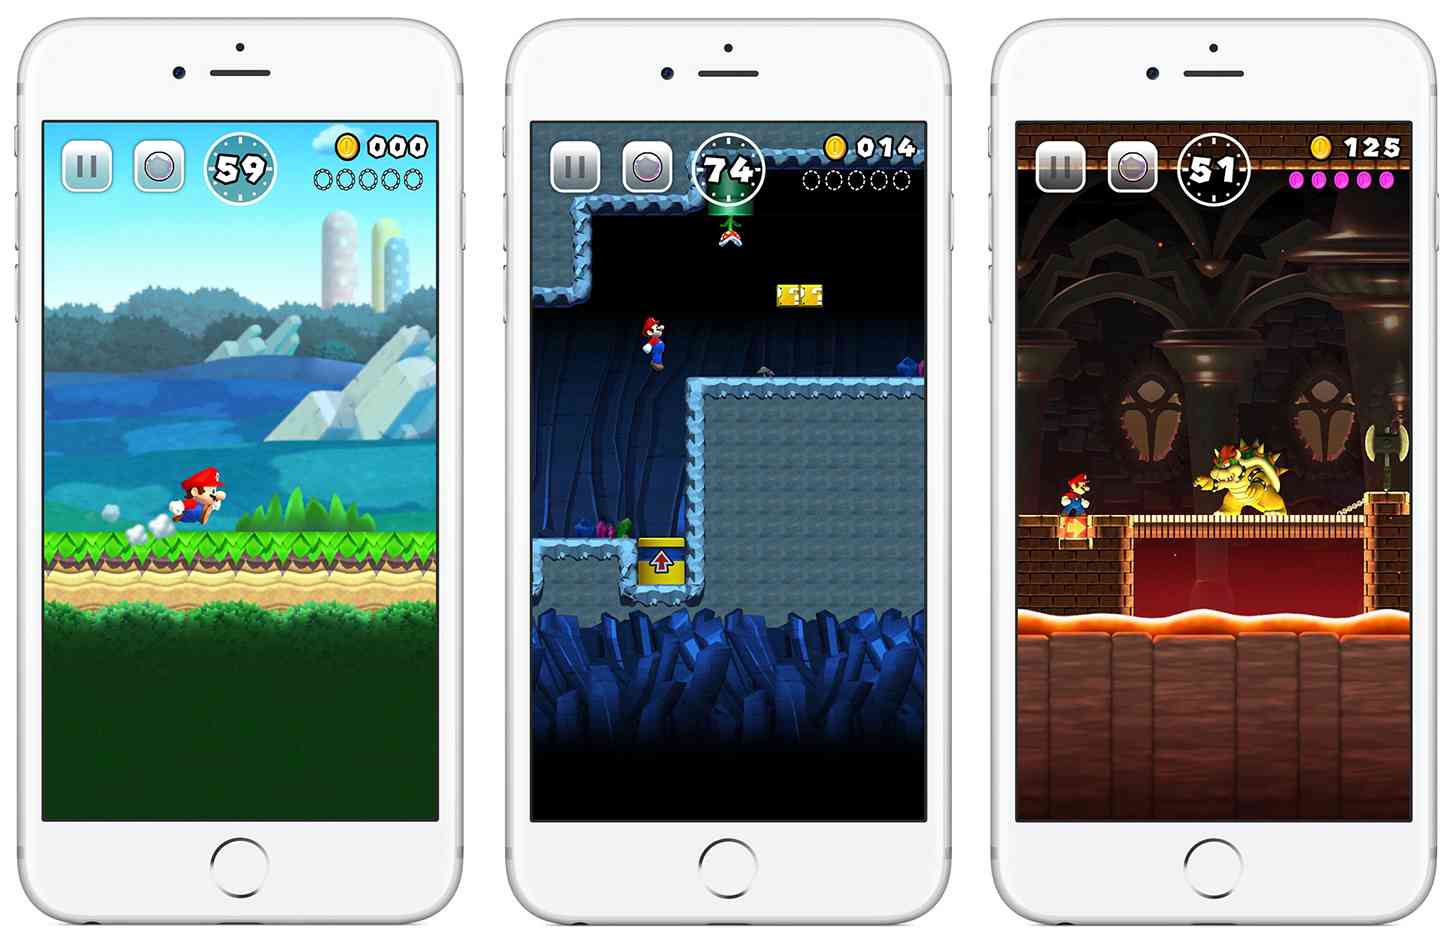 Super Mario Run iPhone screenshots